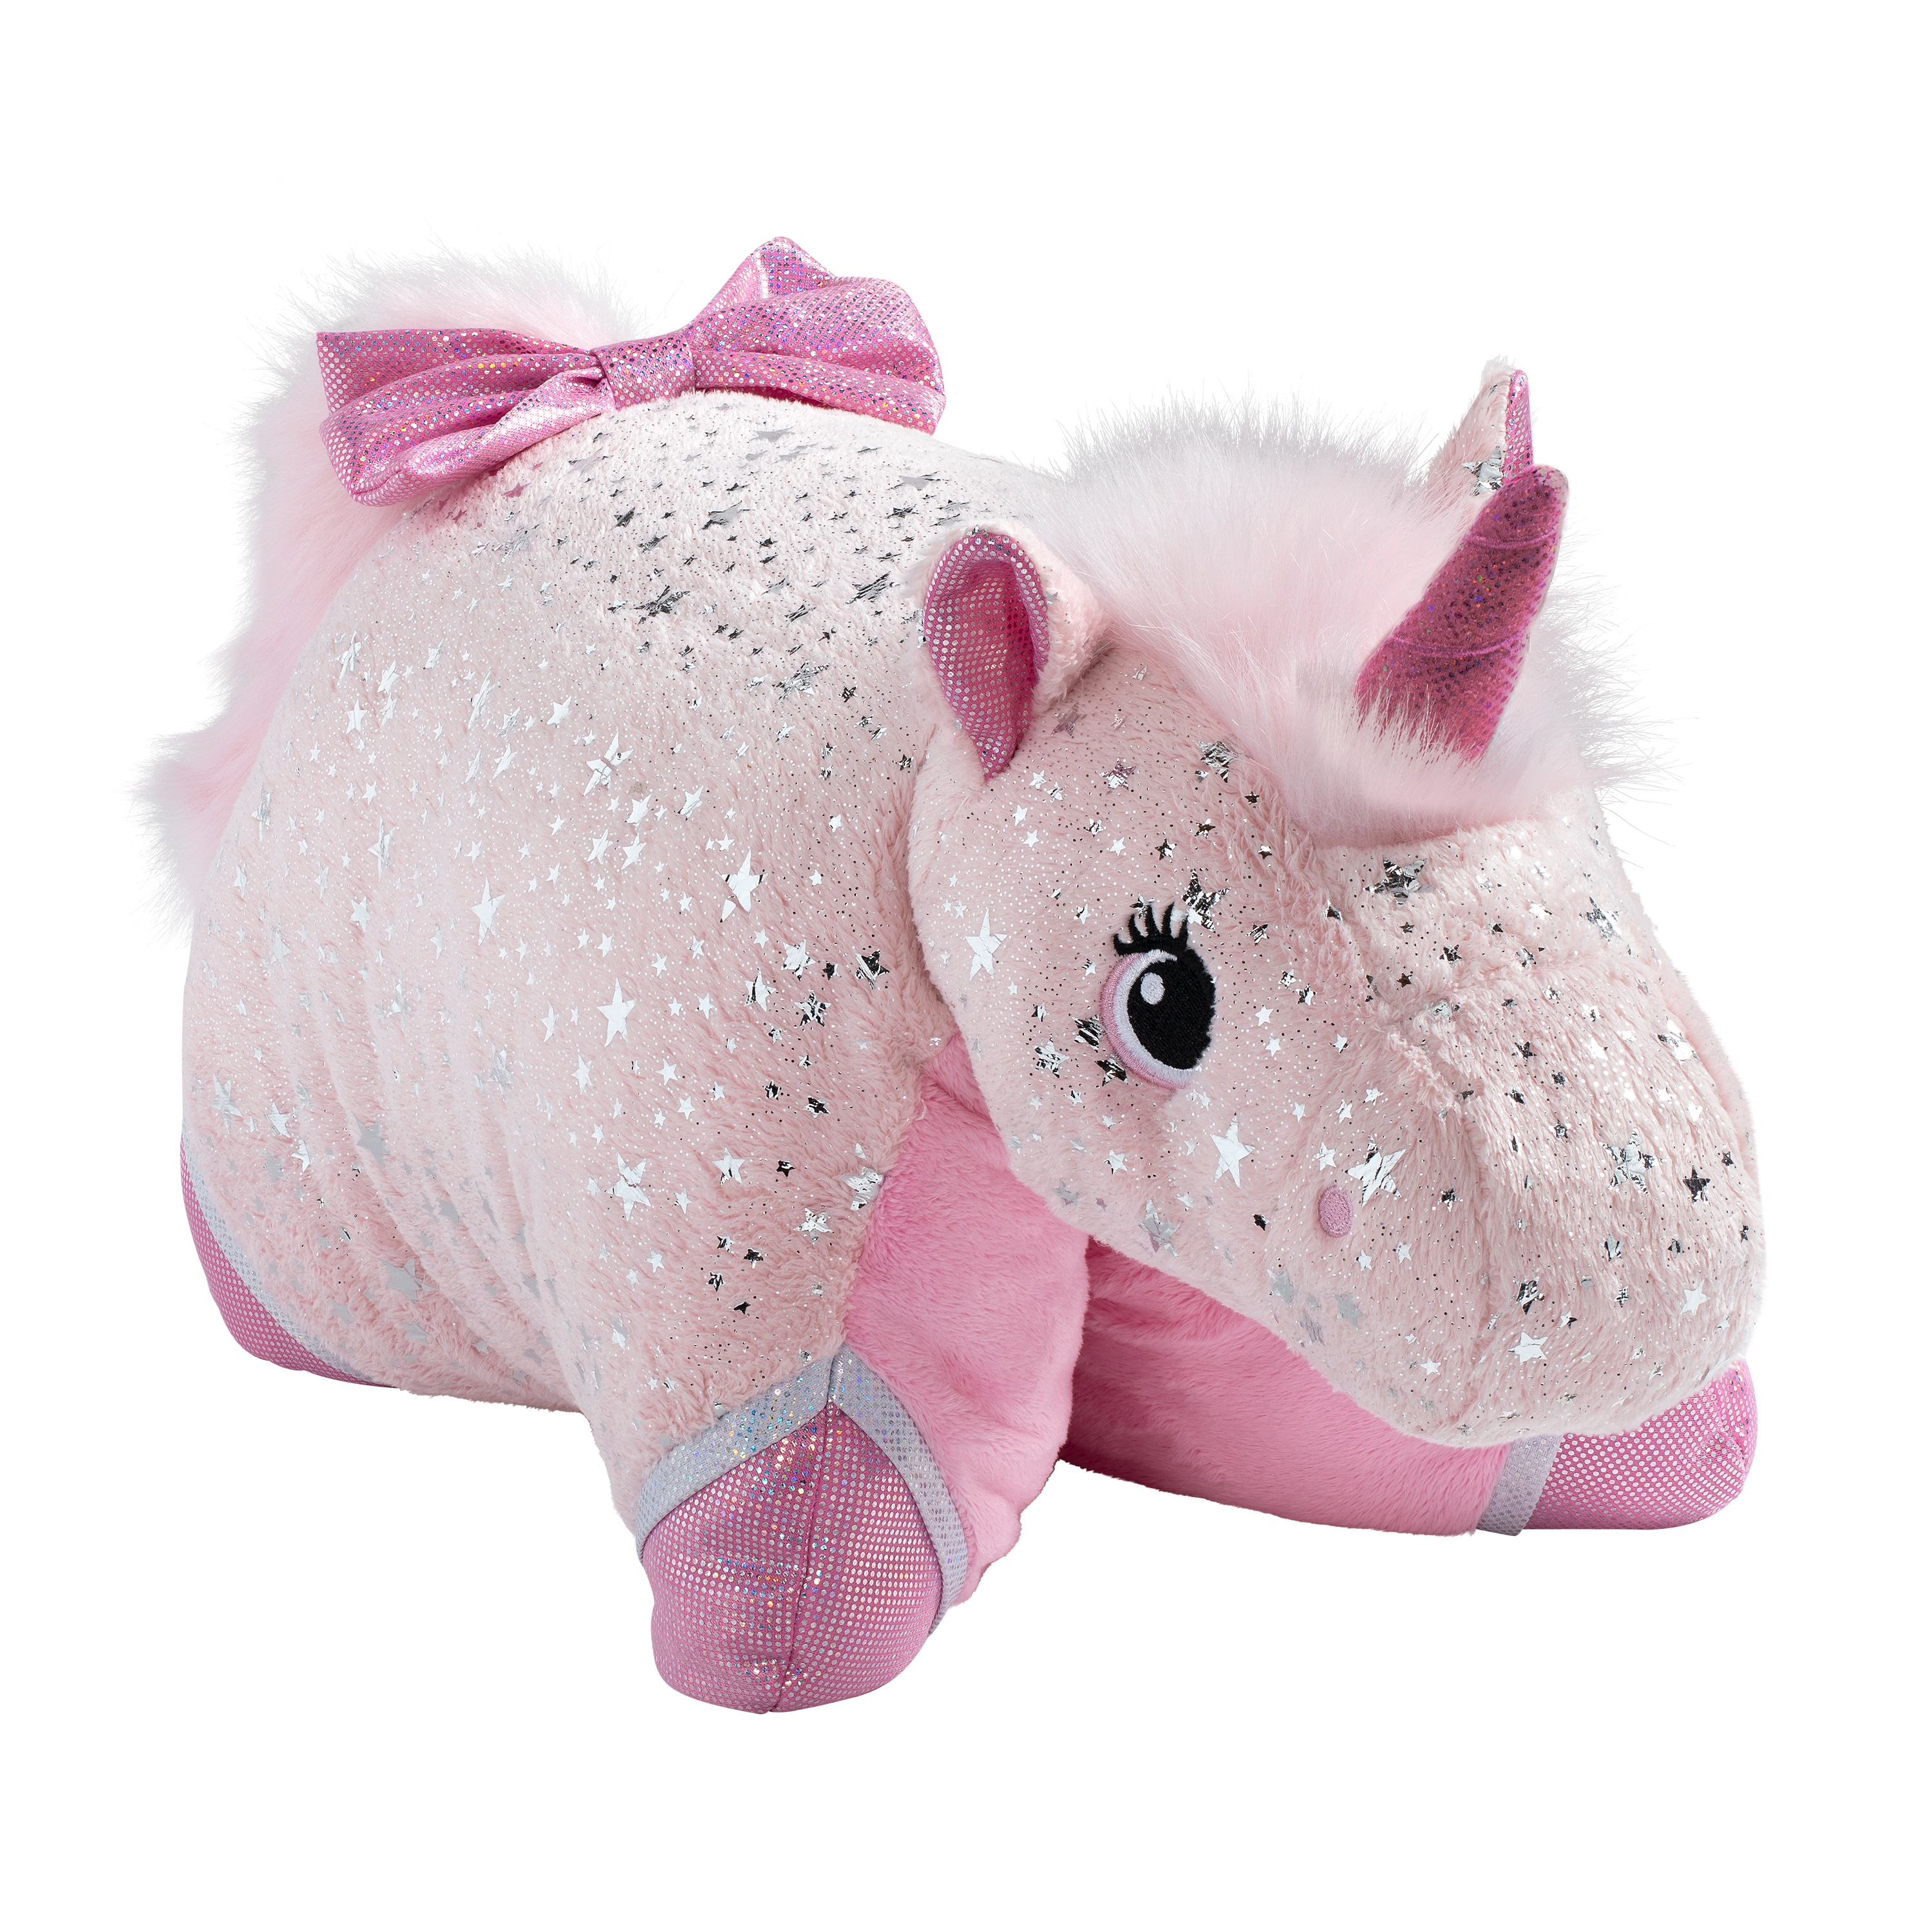 Pillow Pets Signature Sparkly Pink Unicorn Stuffed Animal Plush Toy - image 1 of 6